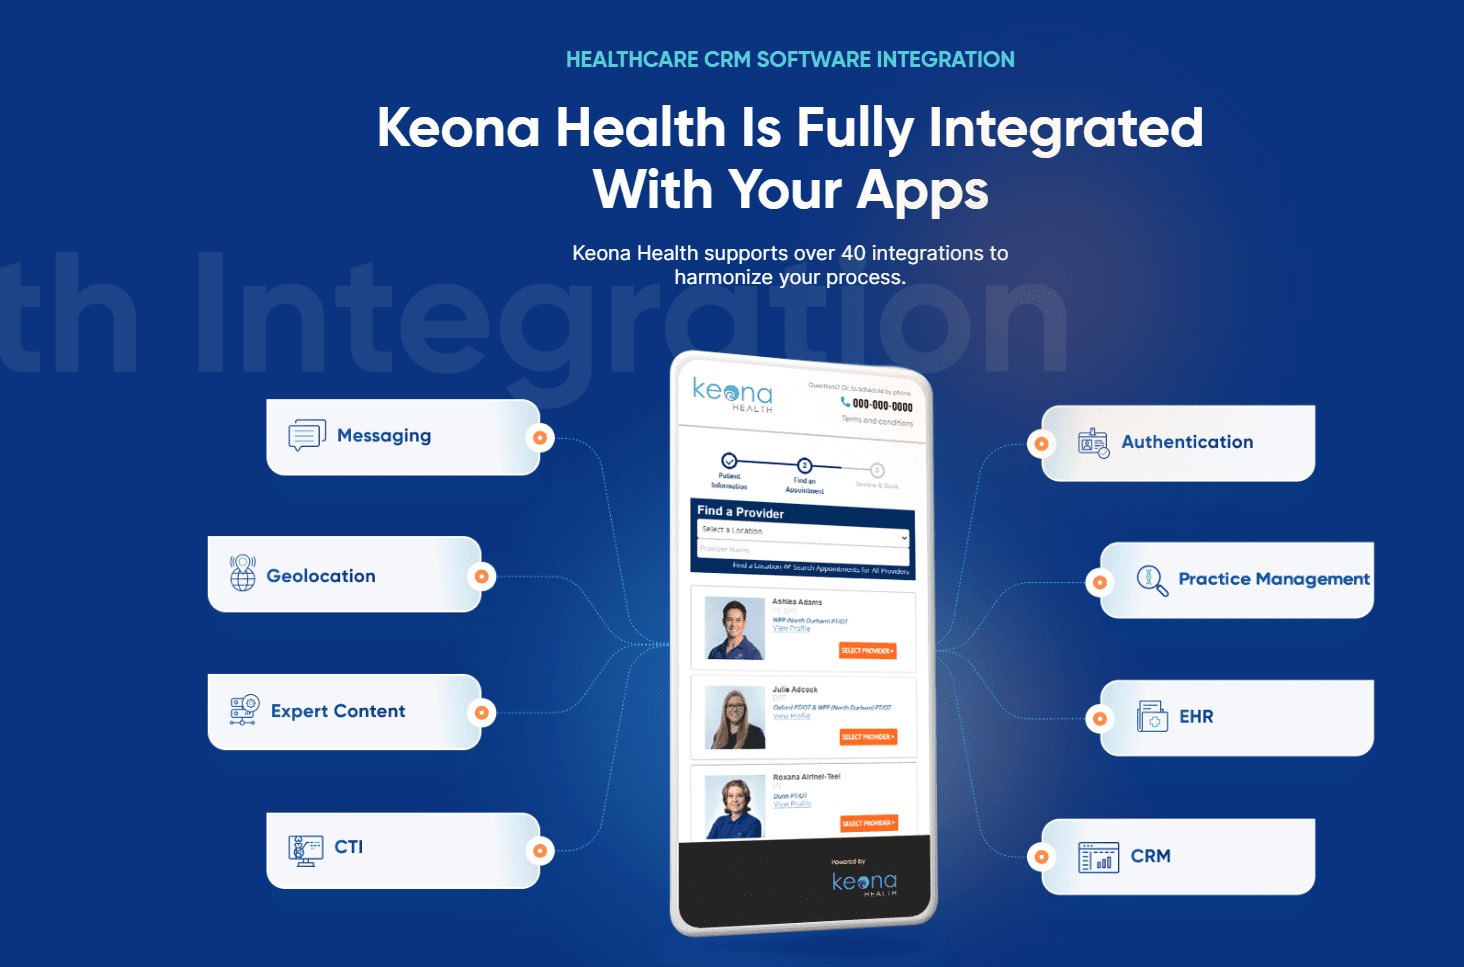 Keona Health Raises $7M for Healthcare CRM Integration